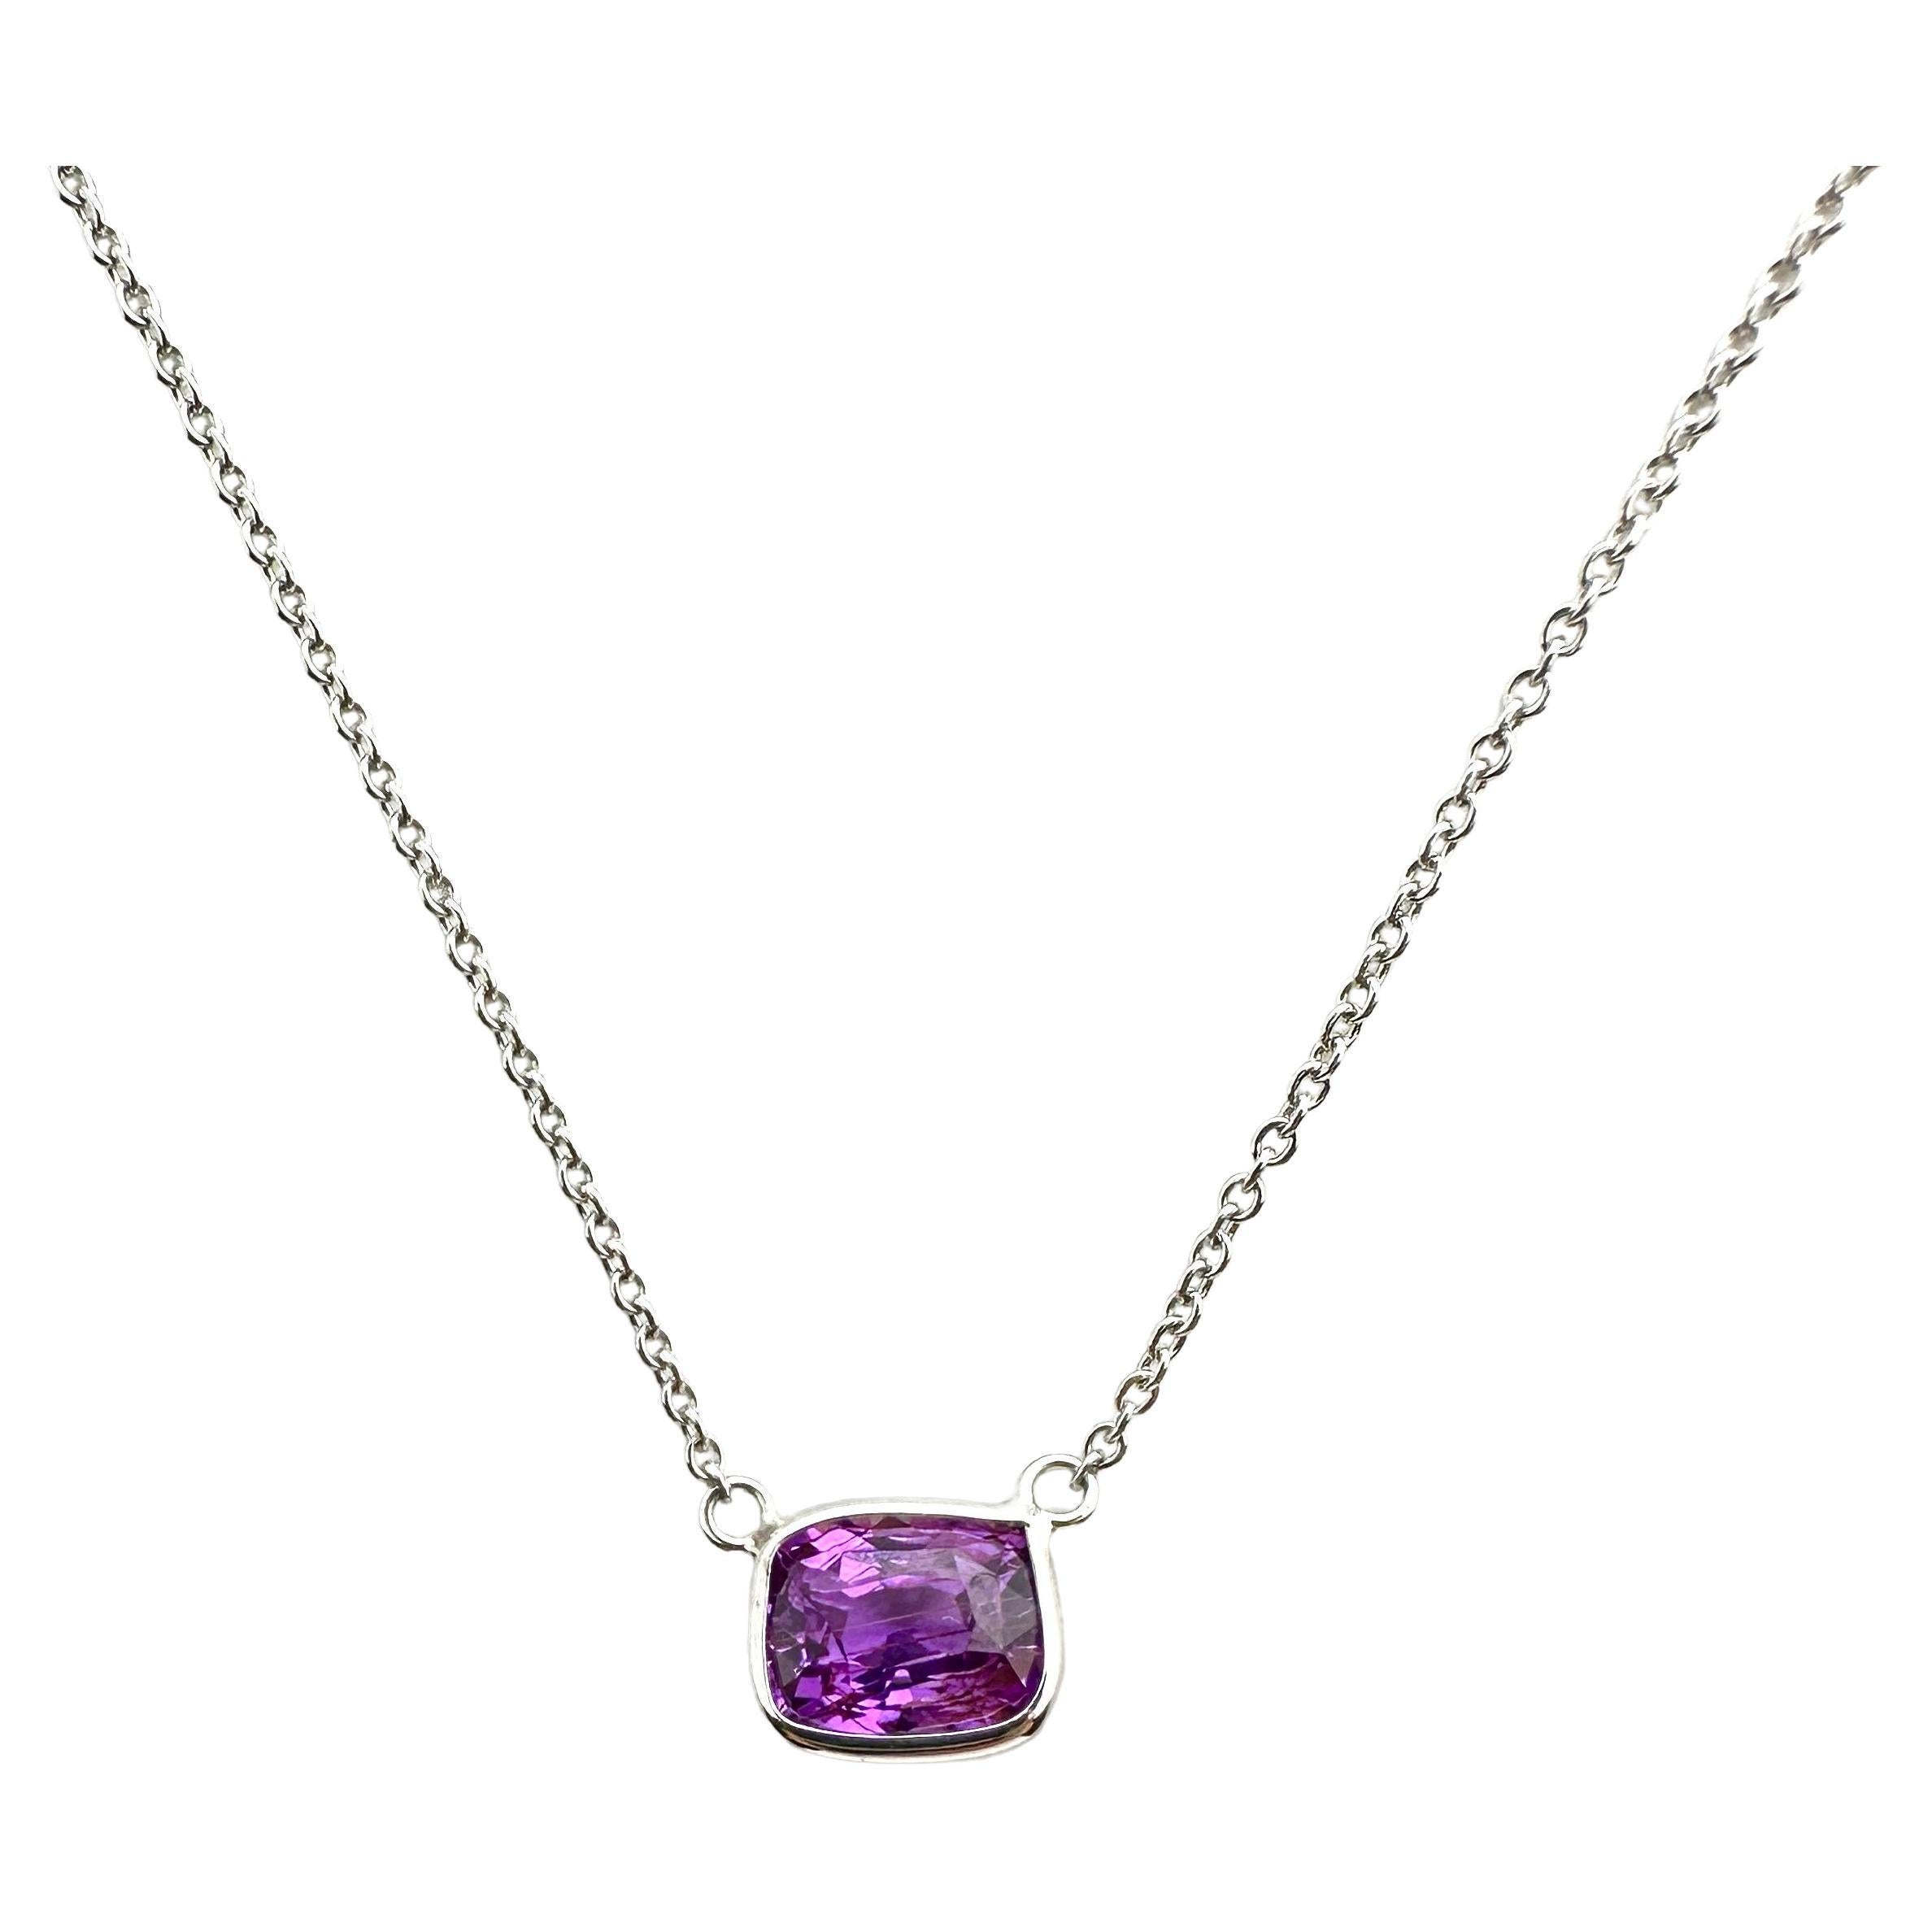 1.59 Carat Sapphire Purple Cushion & Fashion Necklaces Berberyn Cert In 14K WG